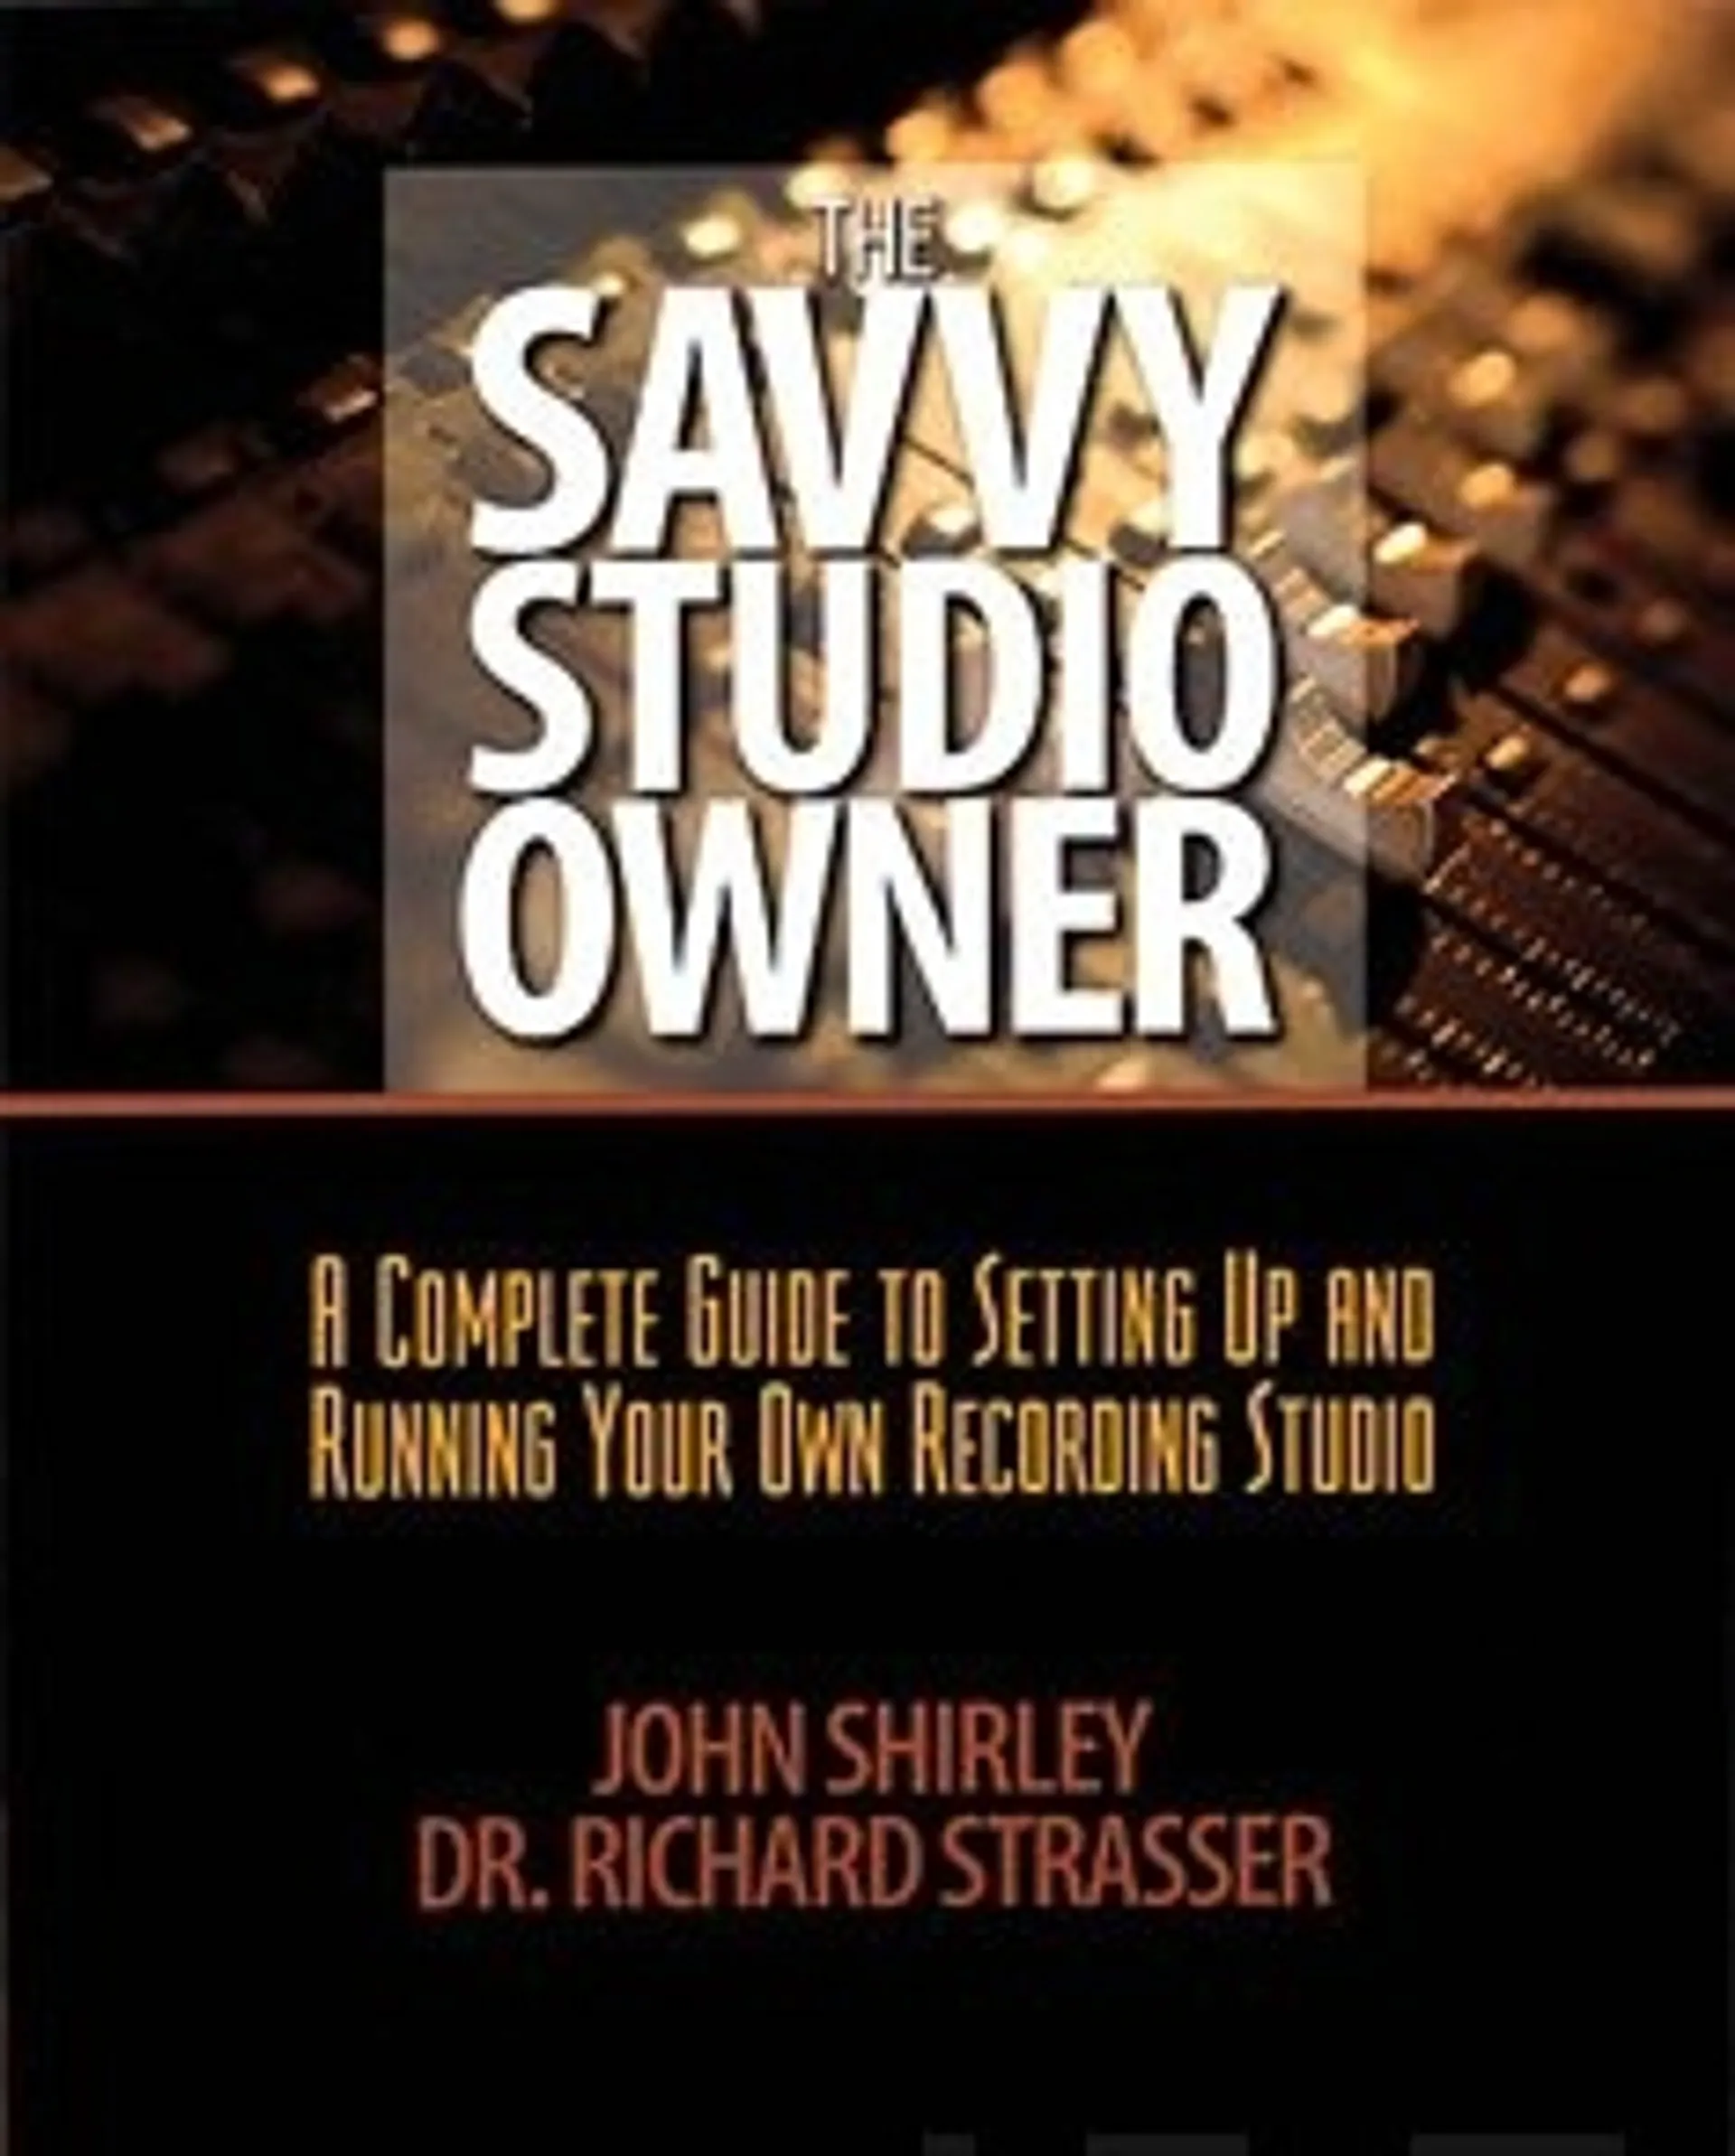 Savvy studio owner